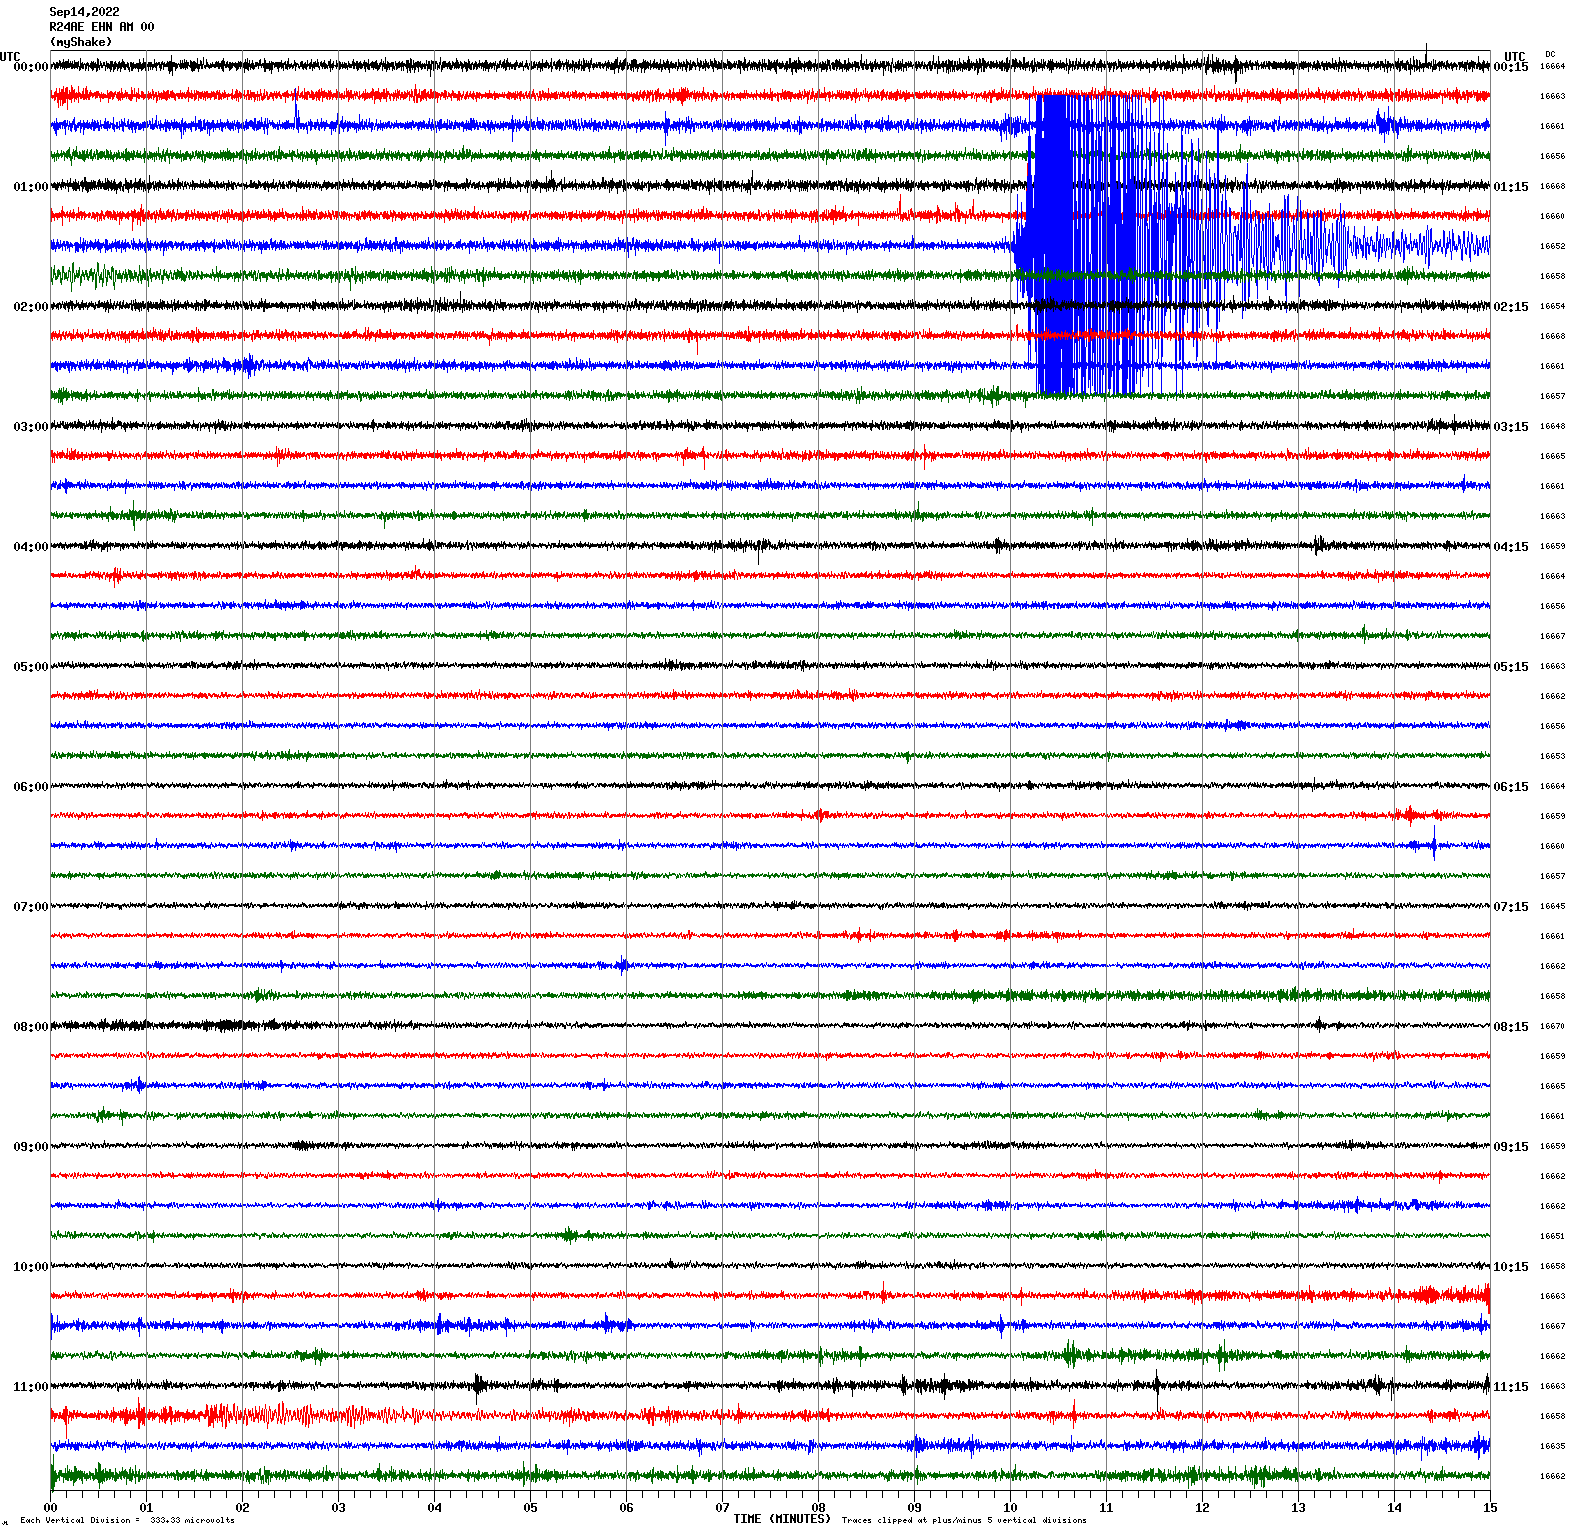 /seismic-data/R24AE/R24AE_EHN_AM_00.2022091400.gif